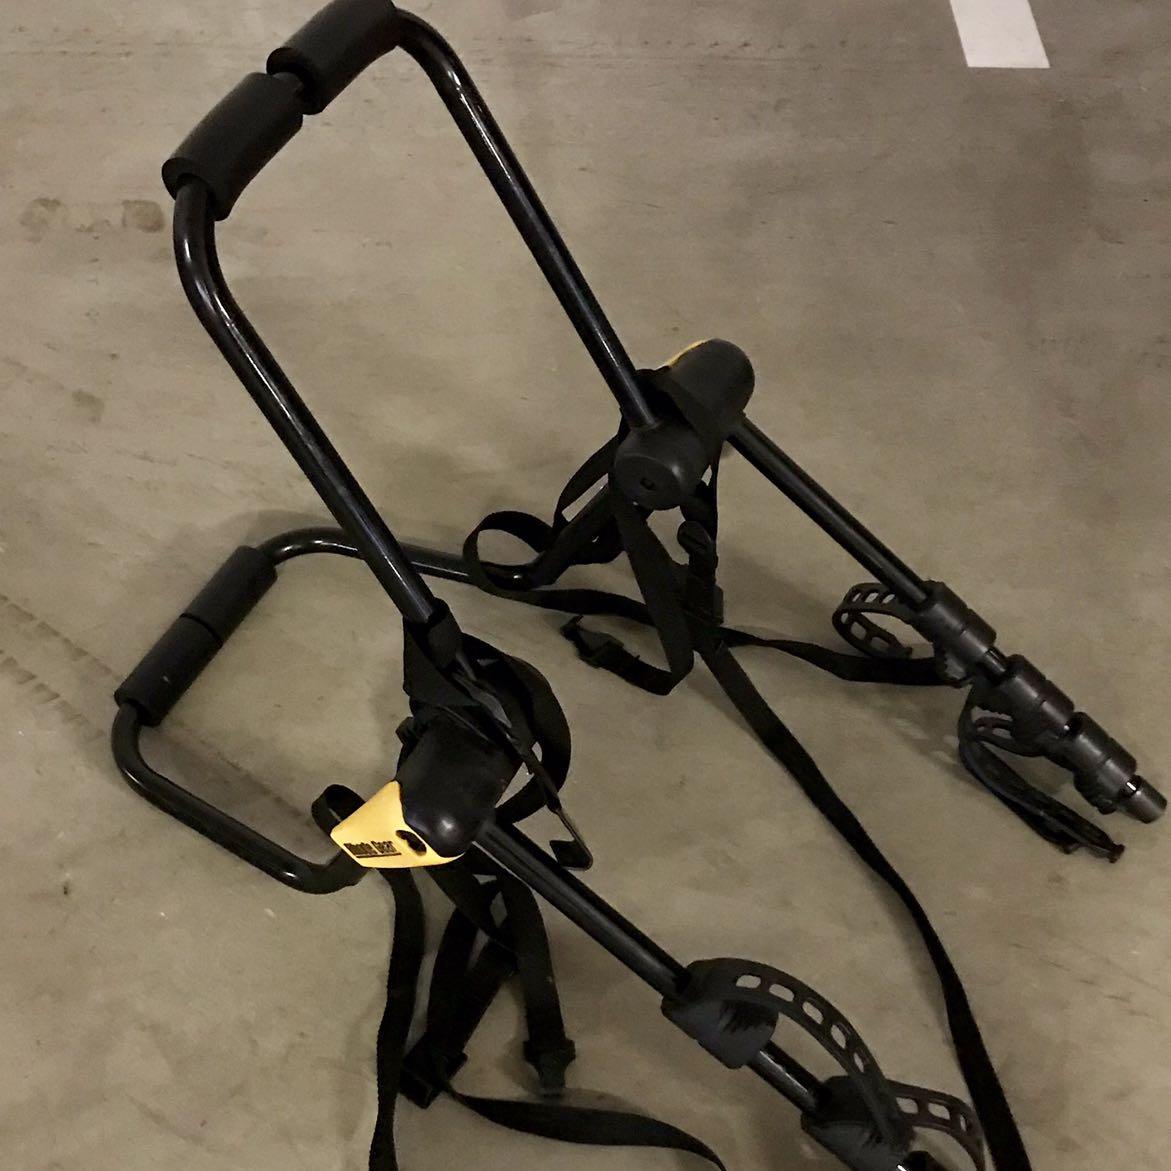 rhode gear bike rack replacement straps